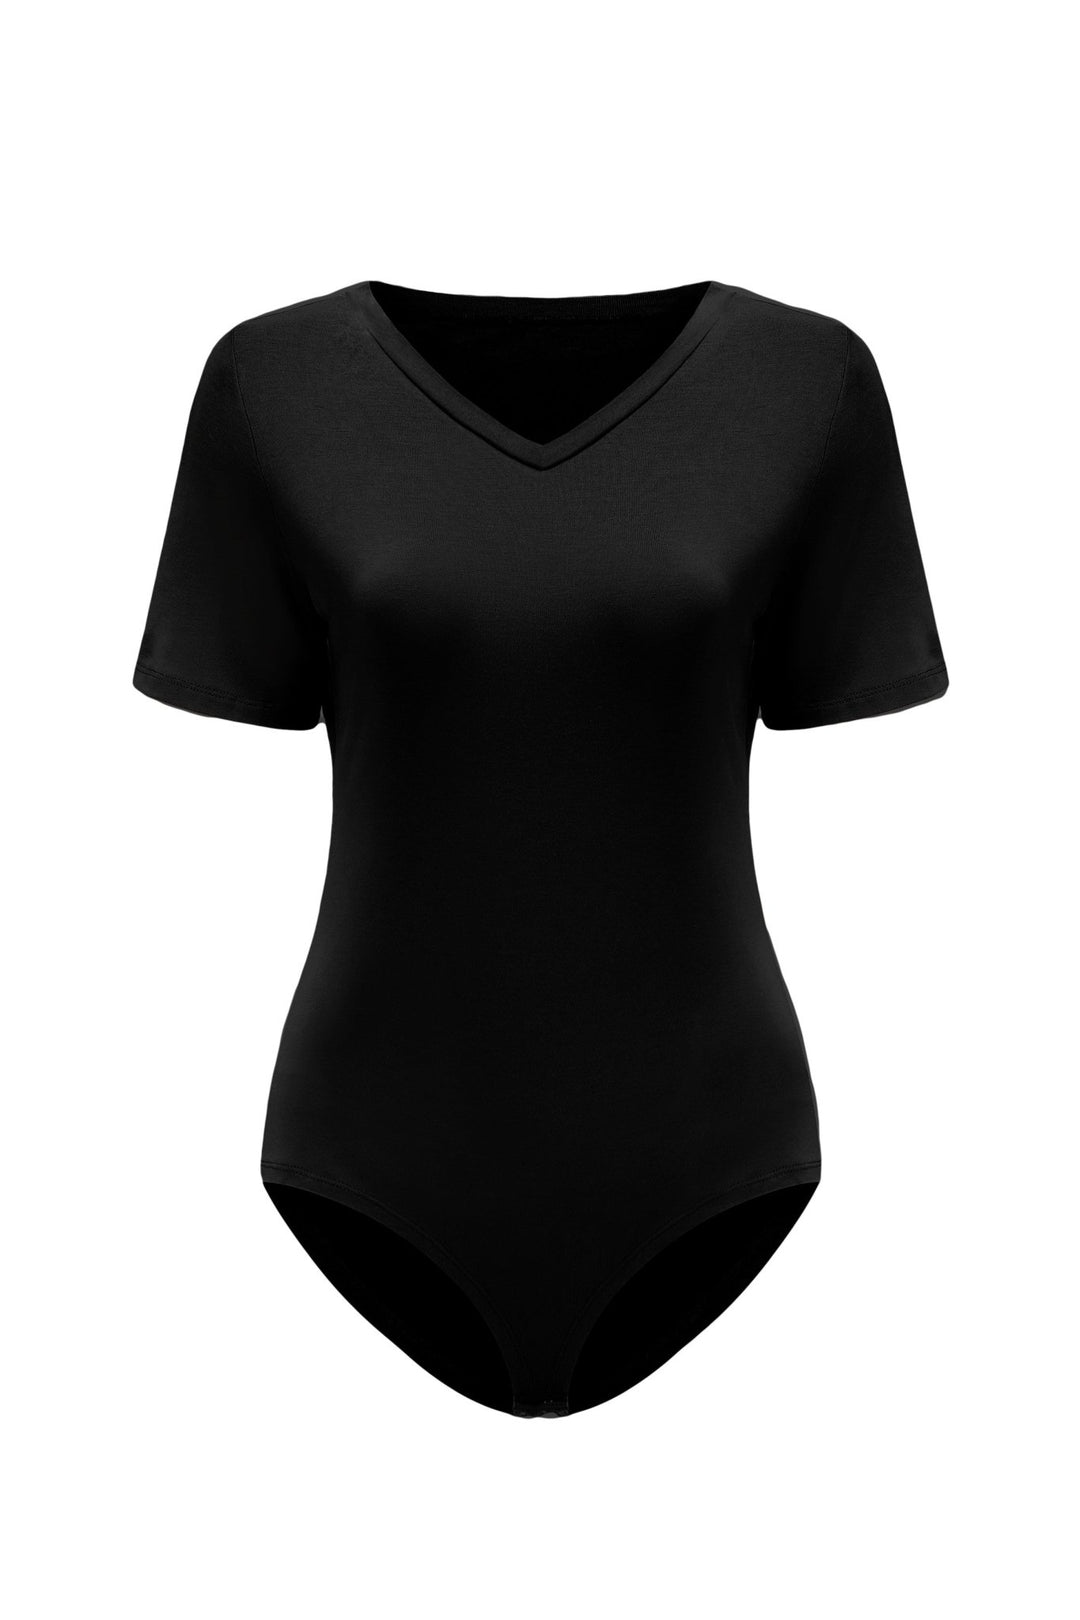 POSESHE Women's Plus Size Square Tank Bodysuit in Black, M-5X 